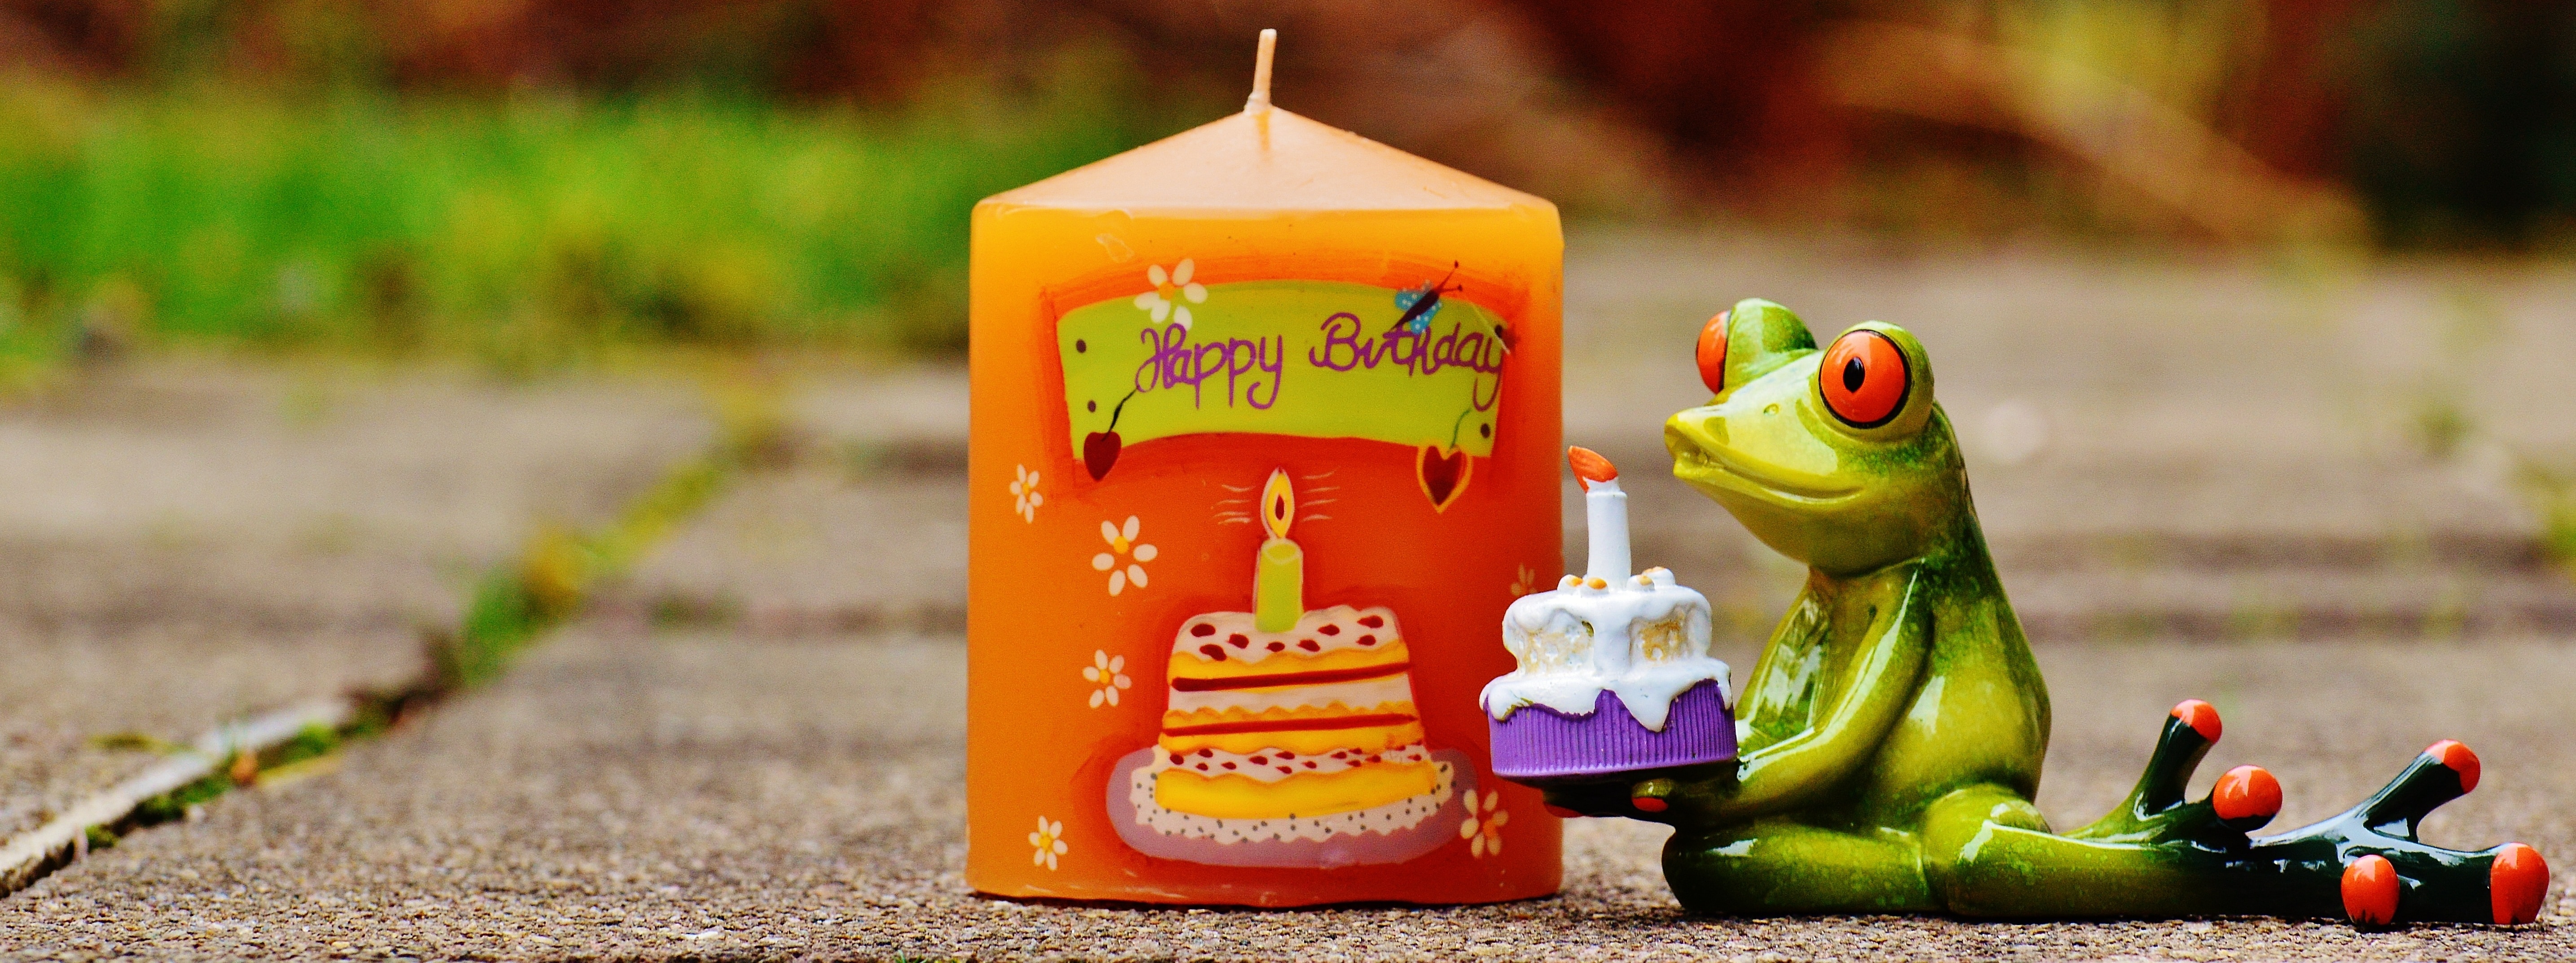 green frog holding cake beside orange happy birthday candle